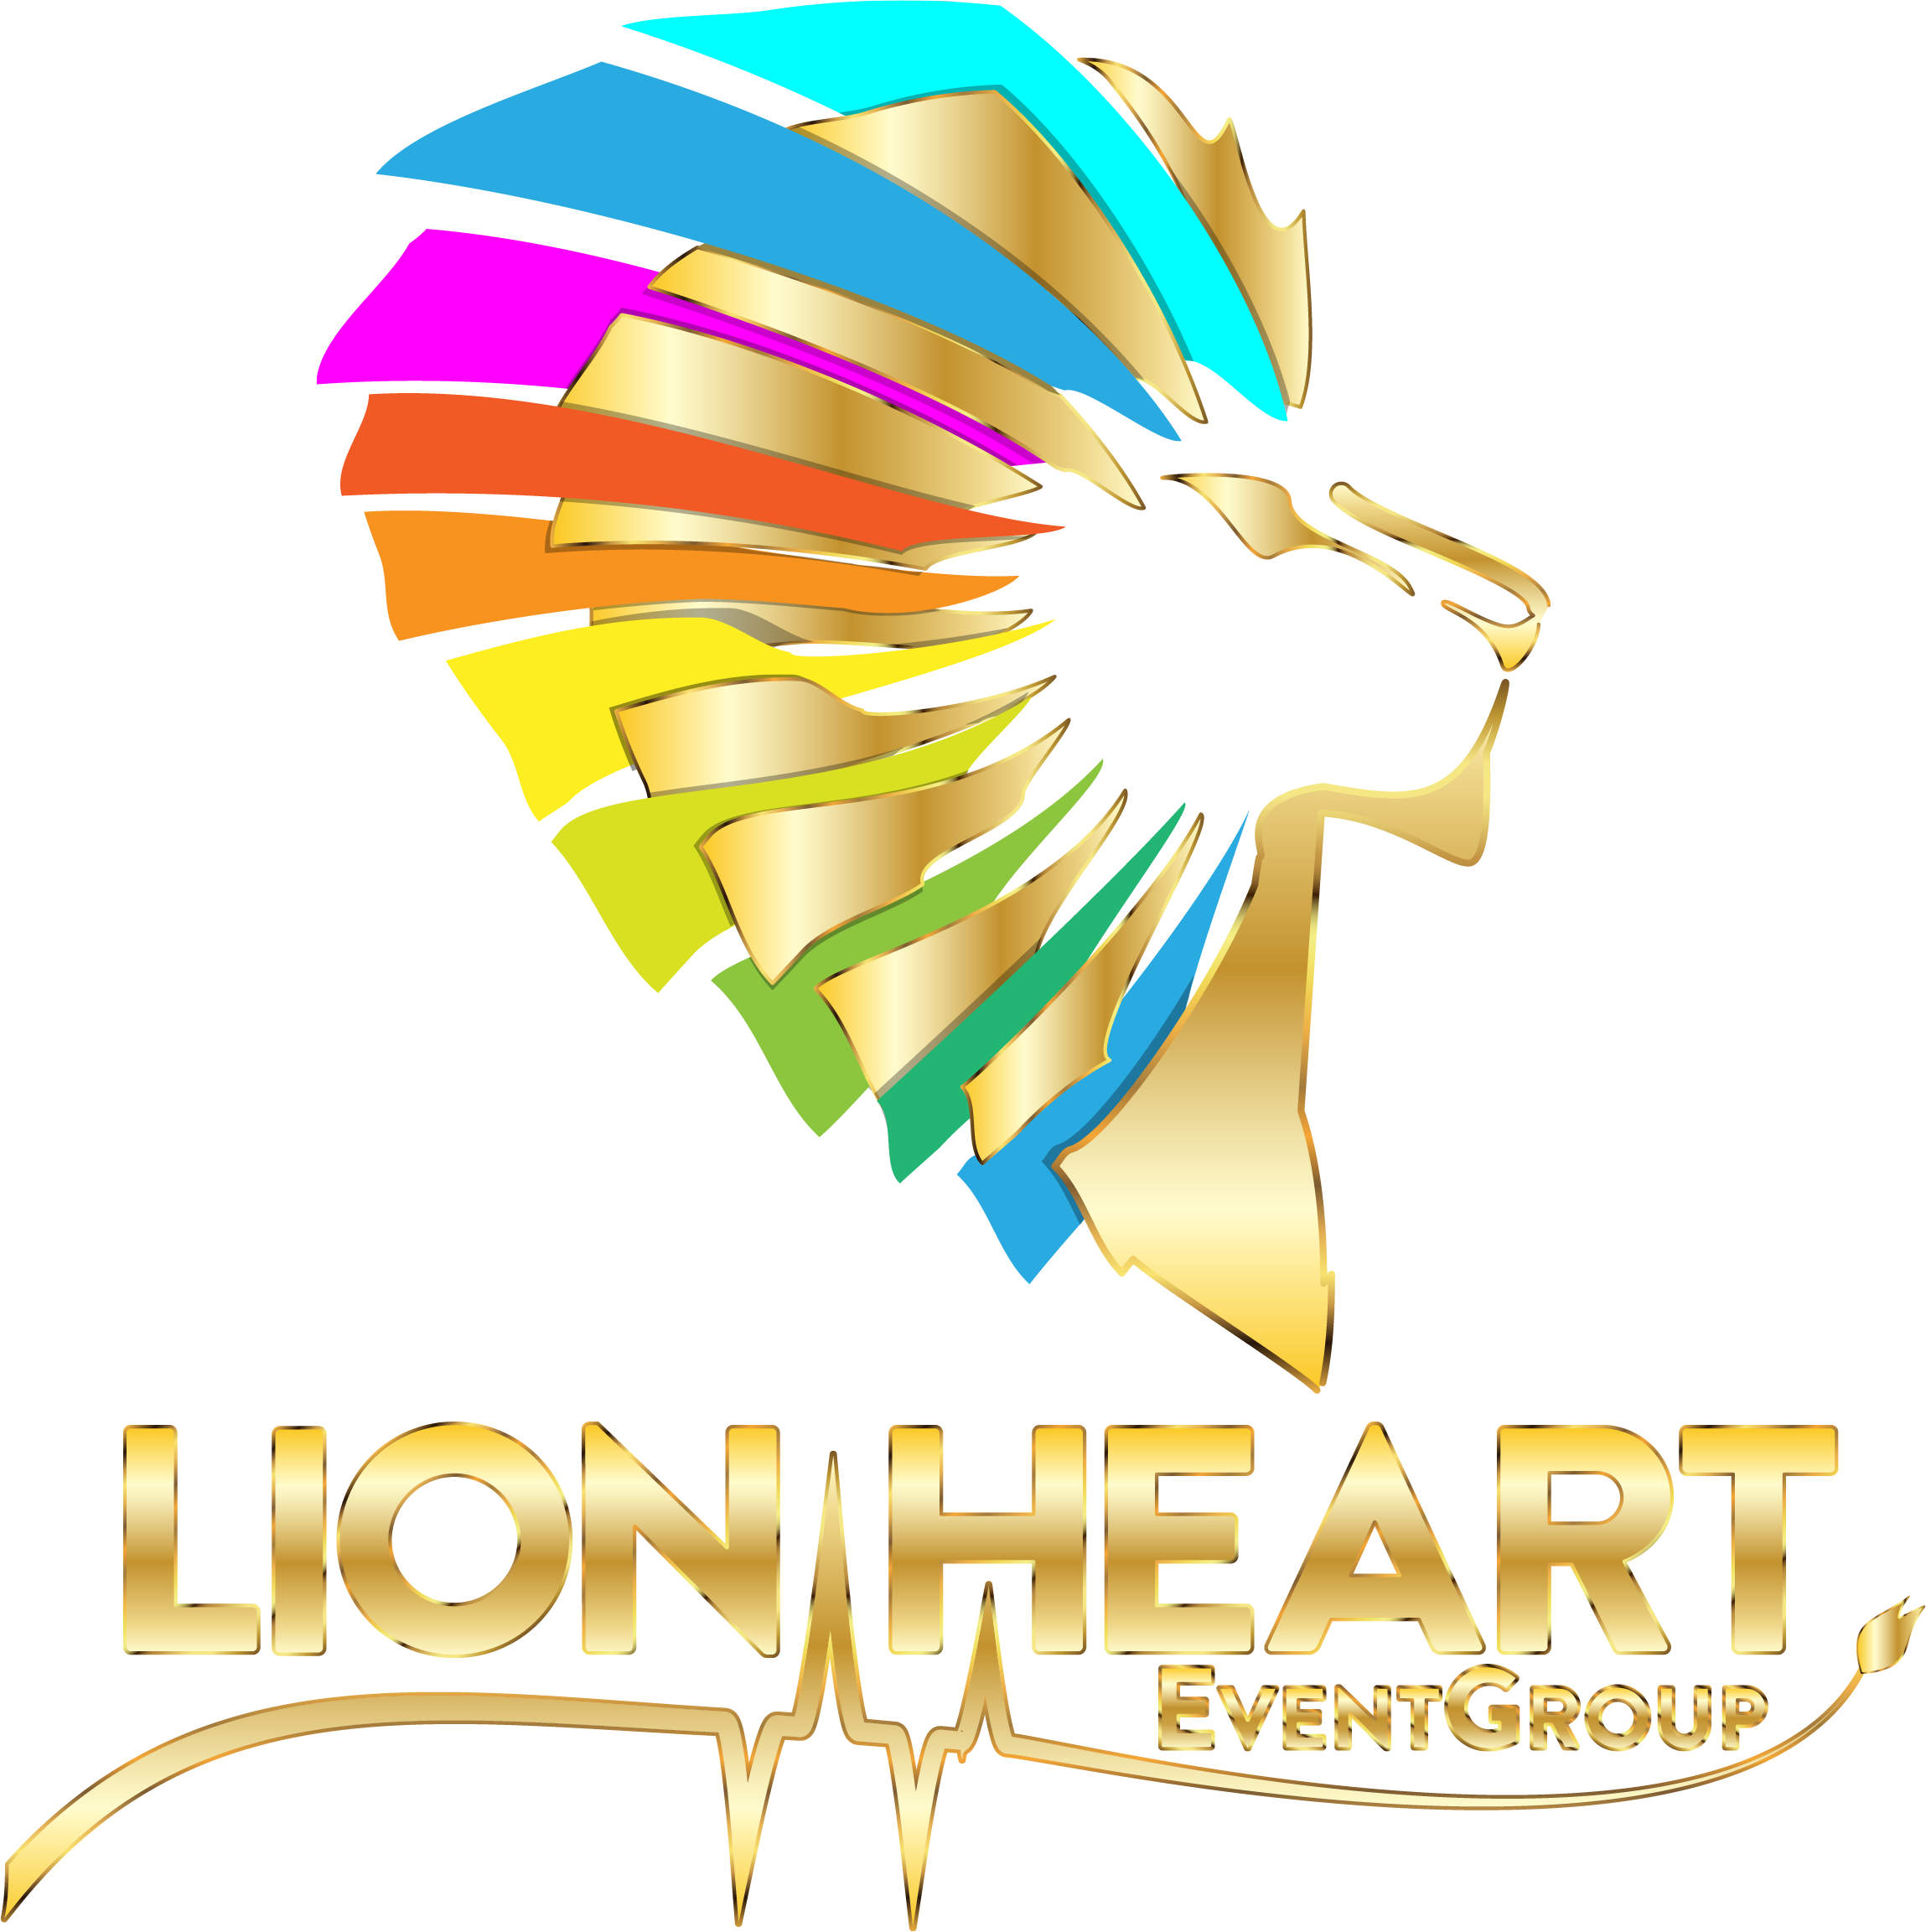 Lionheart Event Group Is A Full-service Event Management - Graphic Design (2298x2305)